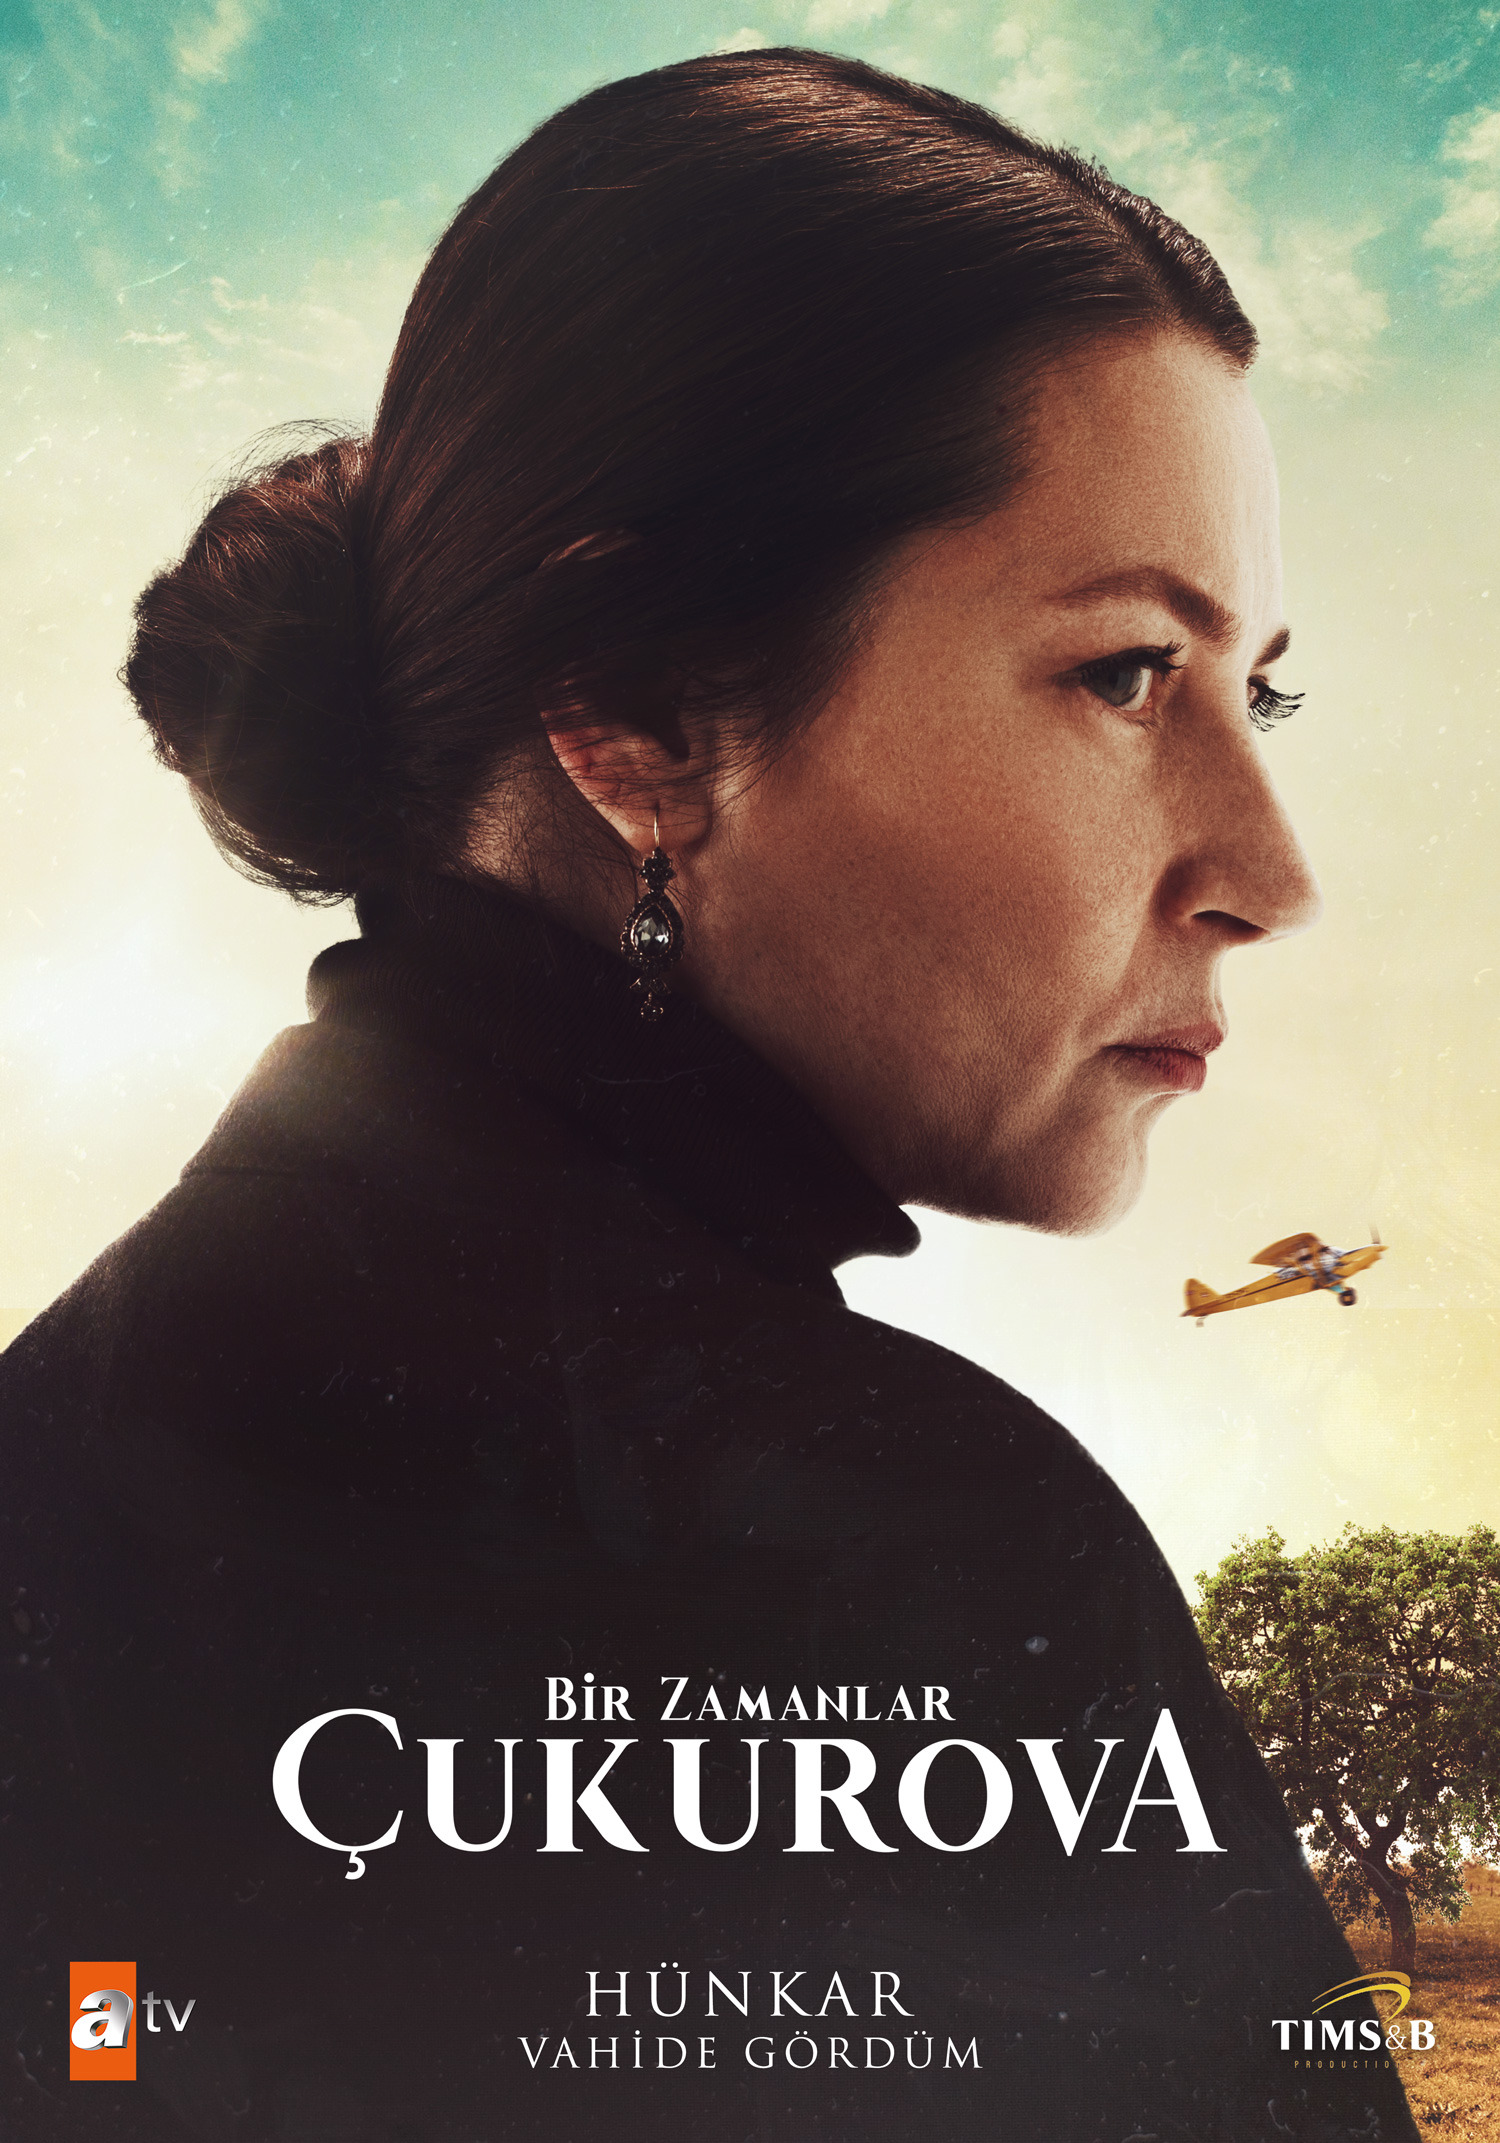 Mega Sized TV Poster Image for Bir zamanlar Çukurova (#12 of 12)